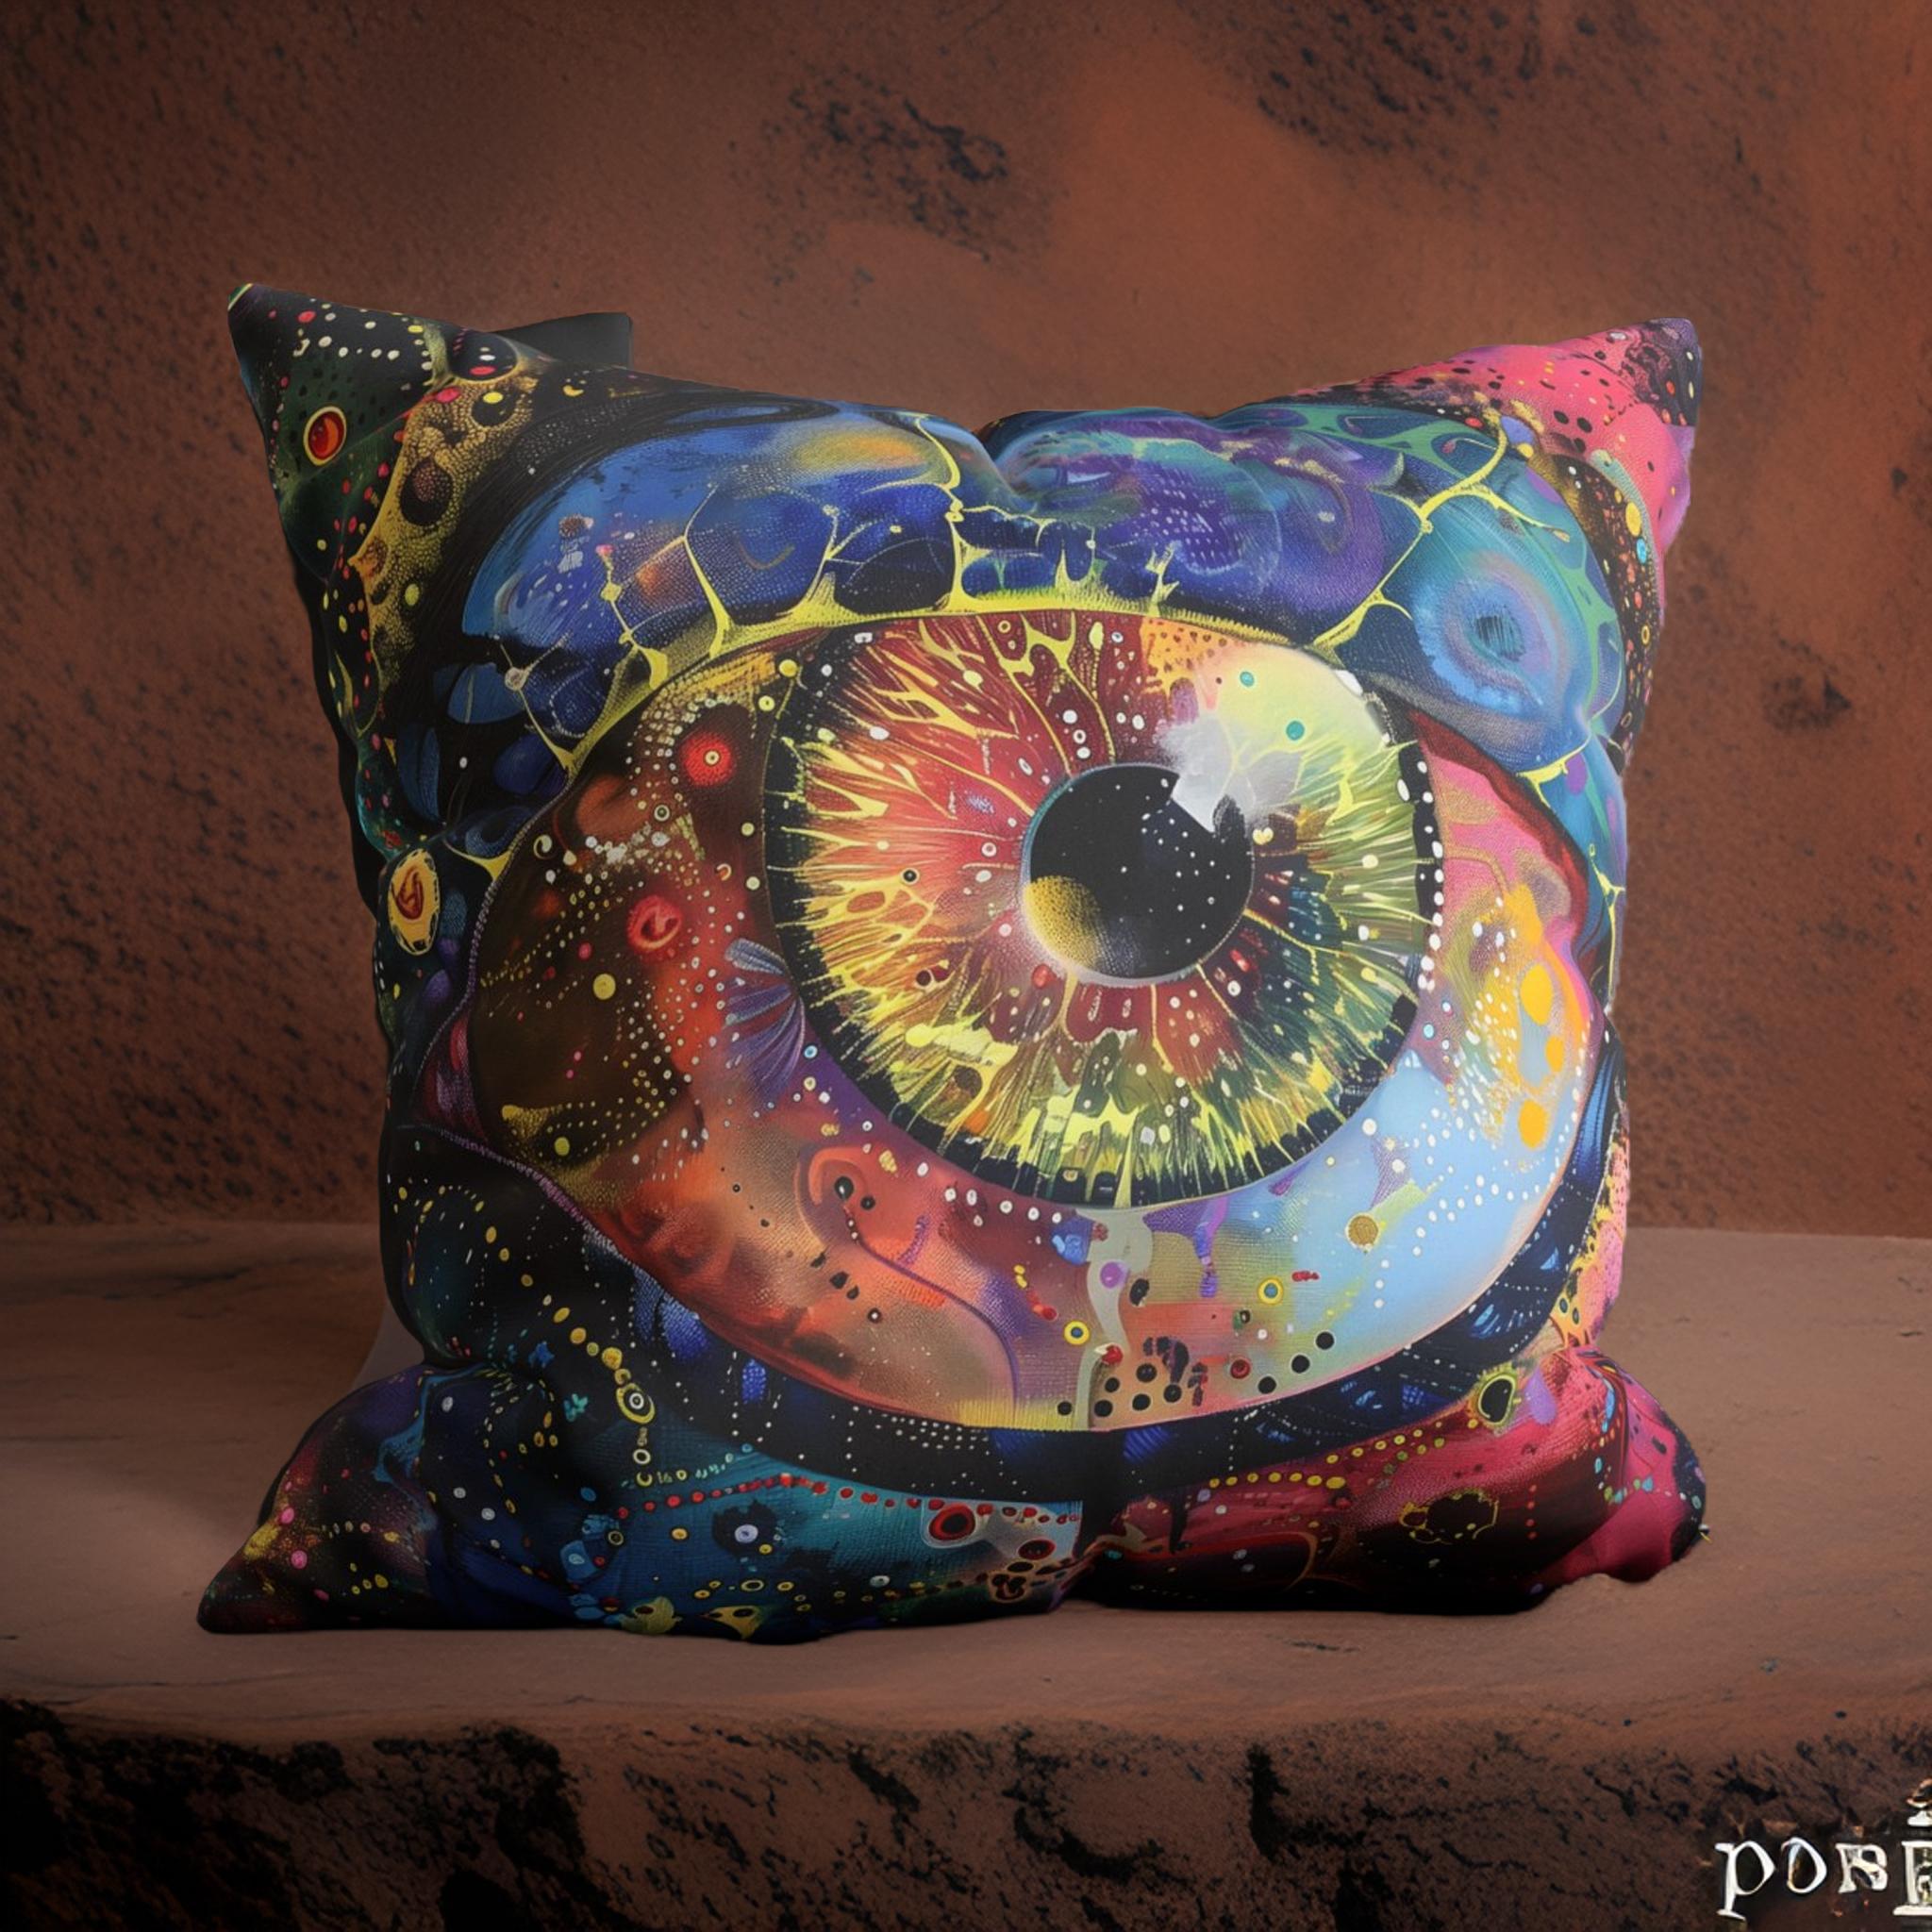 Cosmic Gaze Throw Pillow: Whimsical Decor